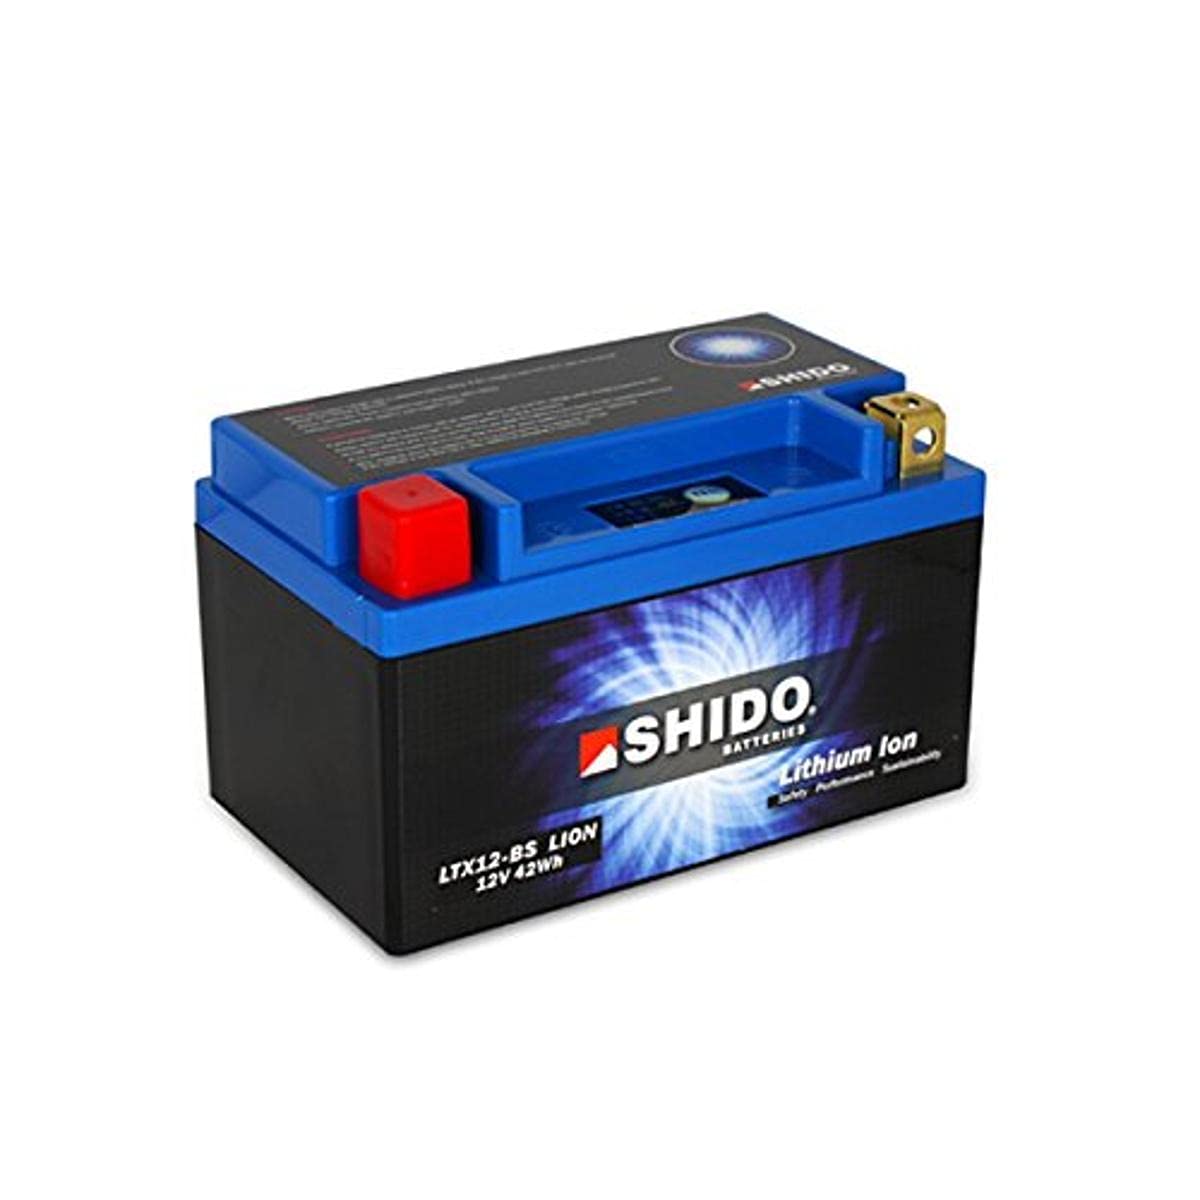 SHIDO LTX12-BS LION -S- Batterie Lithium, Ion Blau (Preis inkl. EUR 7,50 Pfand) von SHIDO